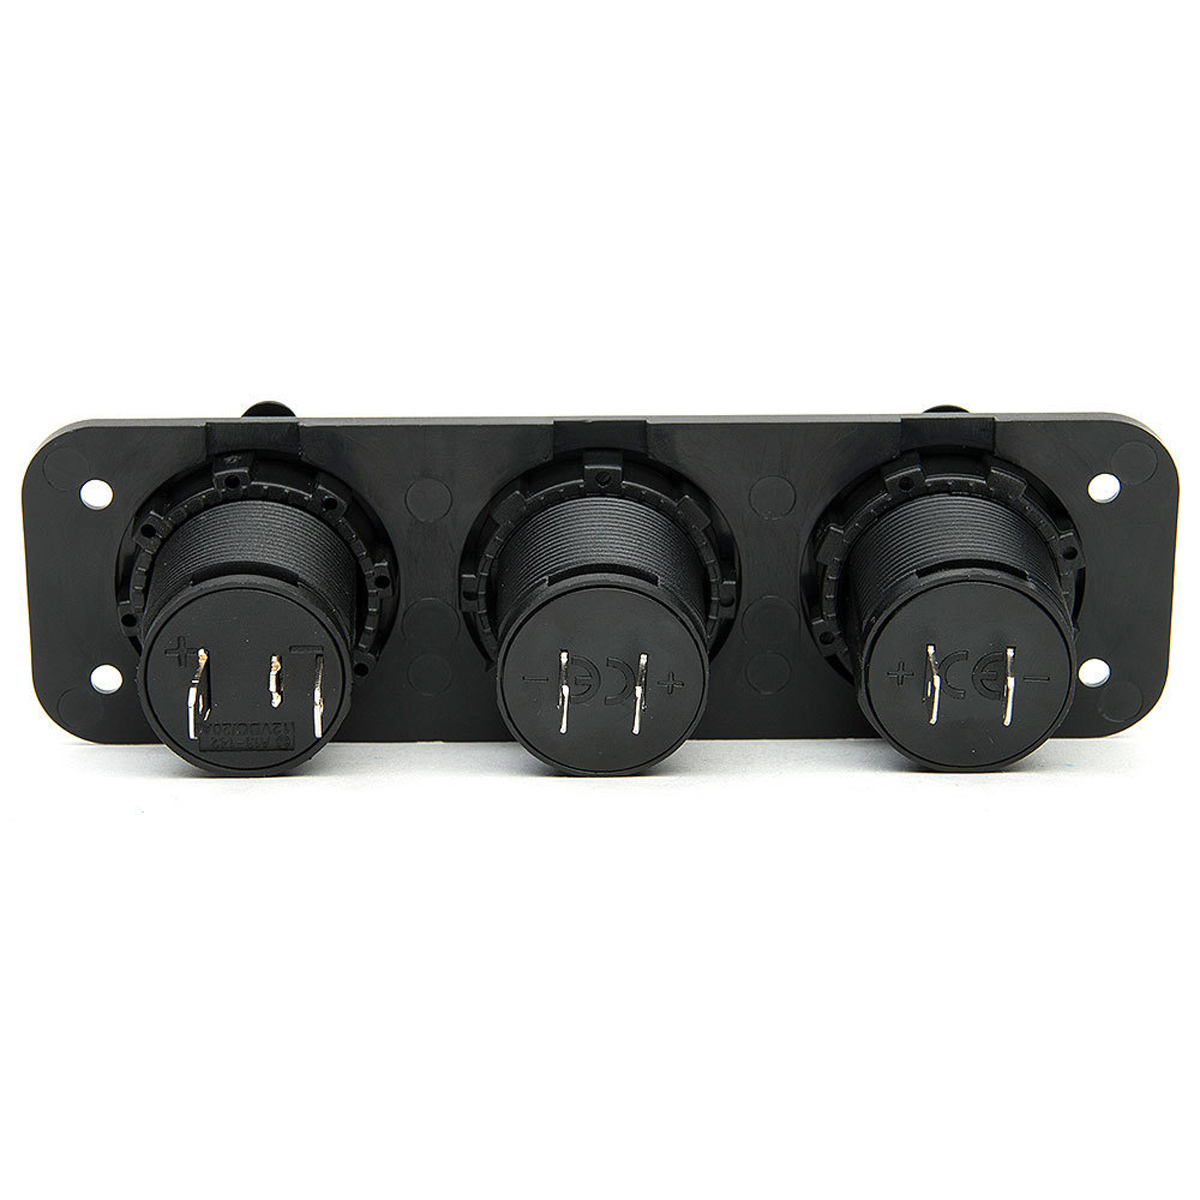 12V 2.1+2.1A Blue LED Rocker Switch Panel Dual USB Charger Power Socket Voltmeter Voltage Display for Car Boat RV